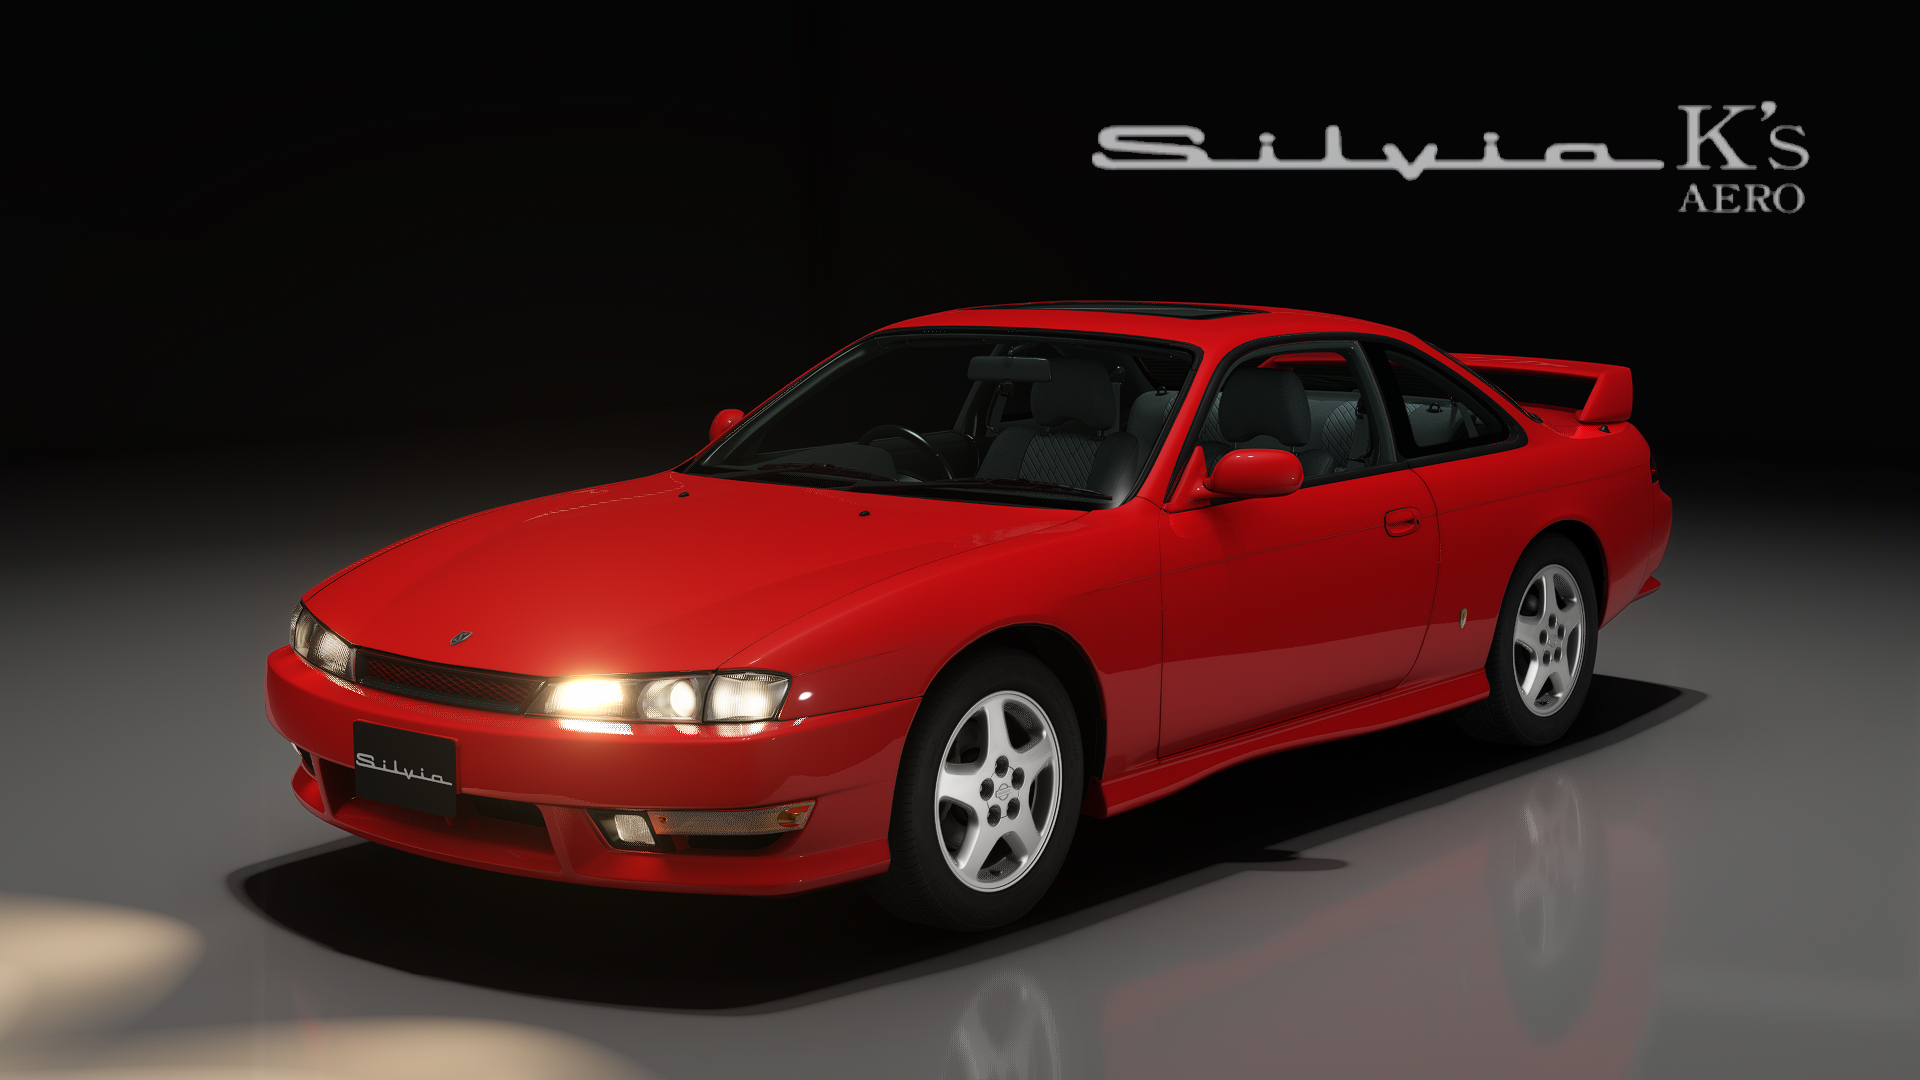 Nissan Silvia K's Aero (S14), skin 04_super_red_aj4